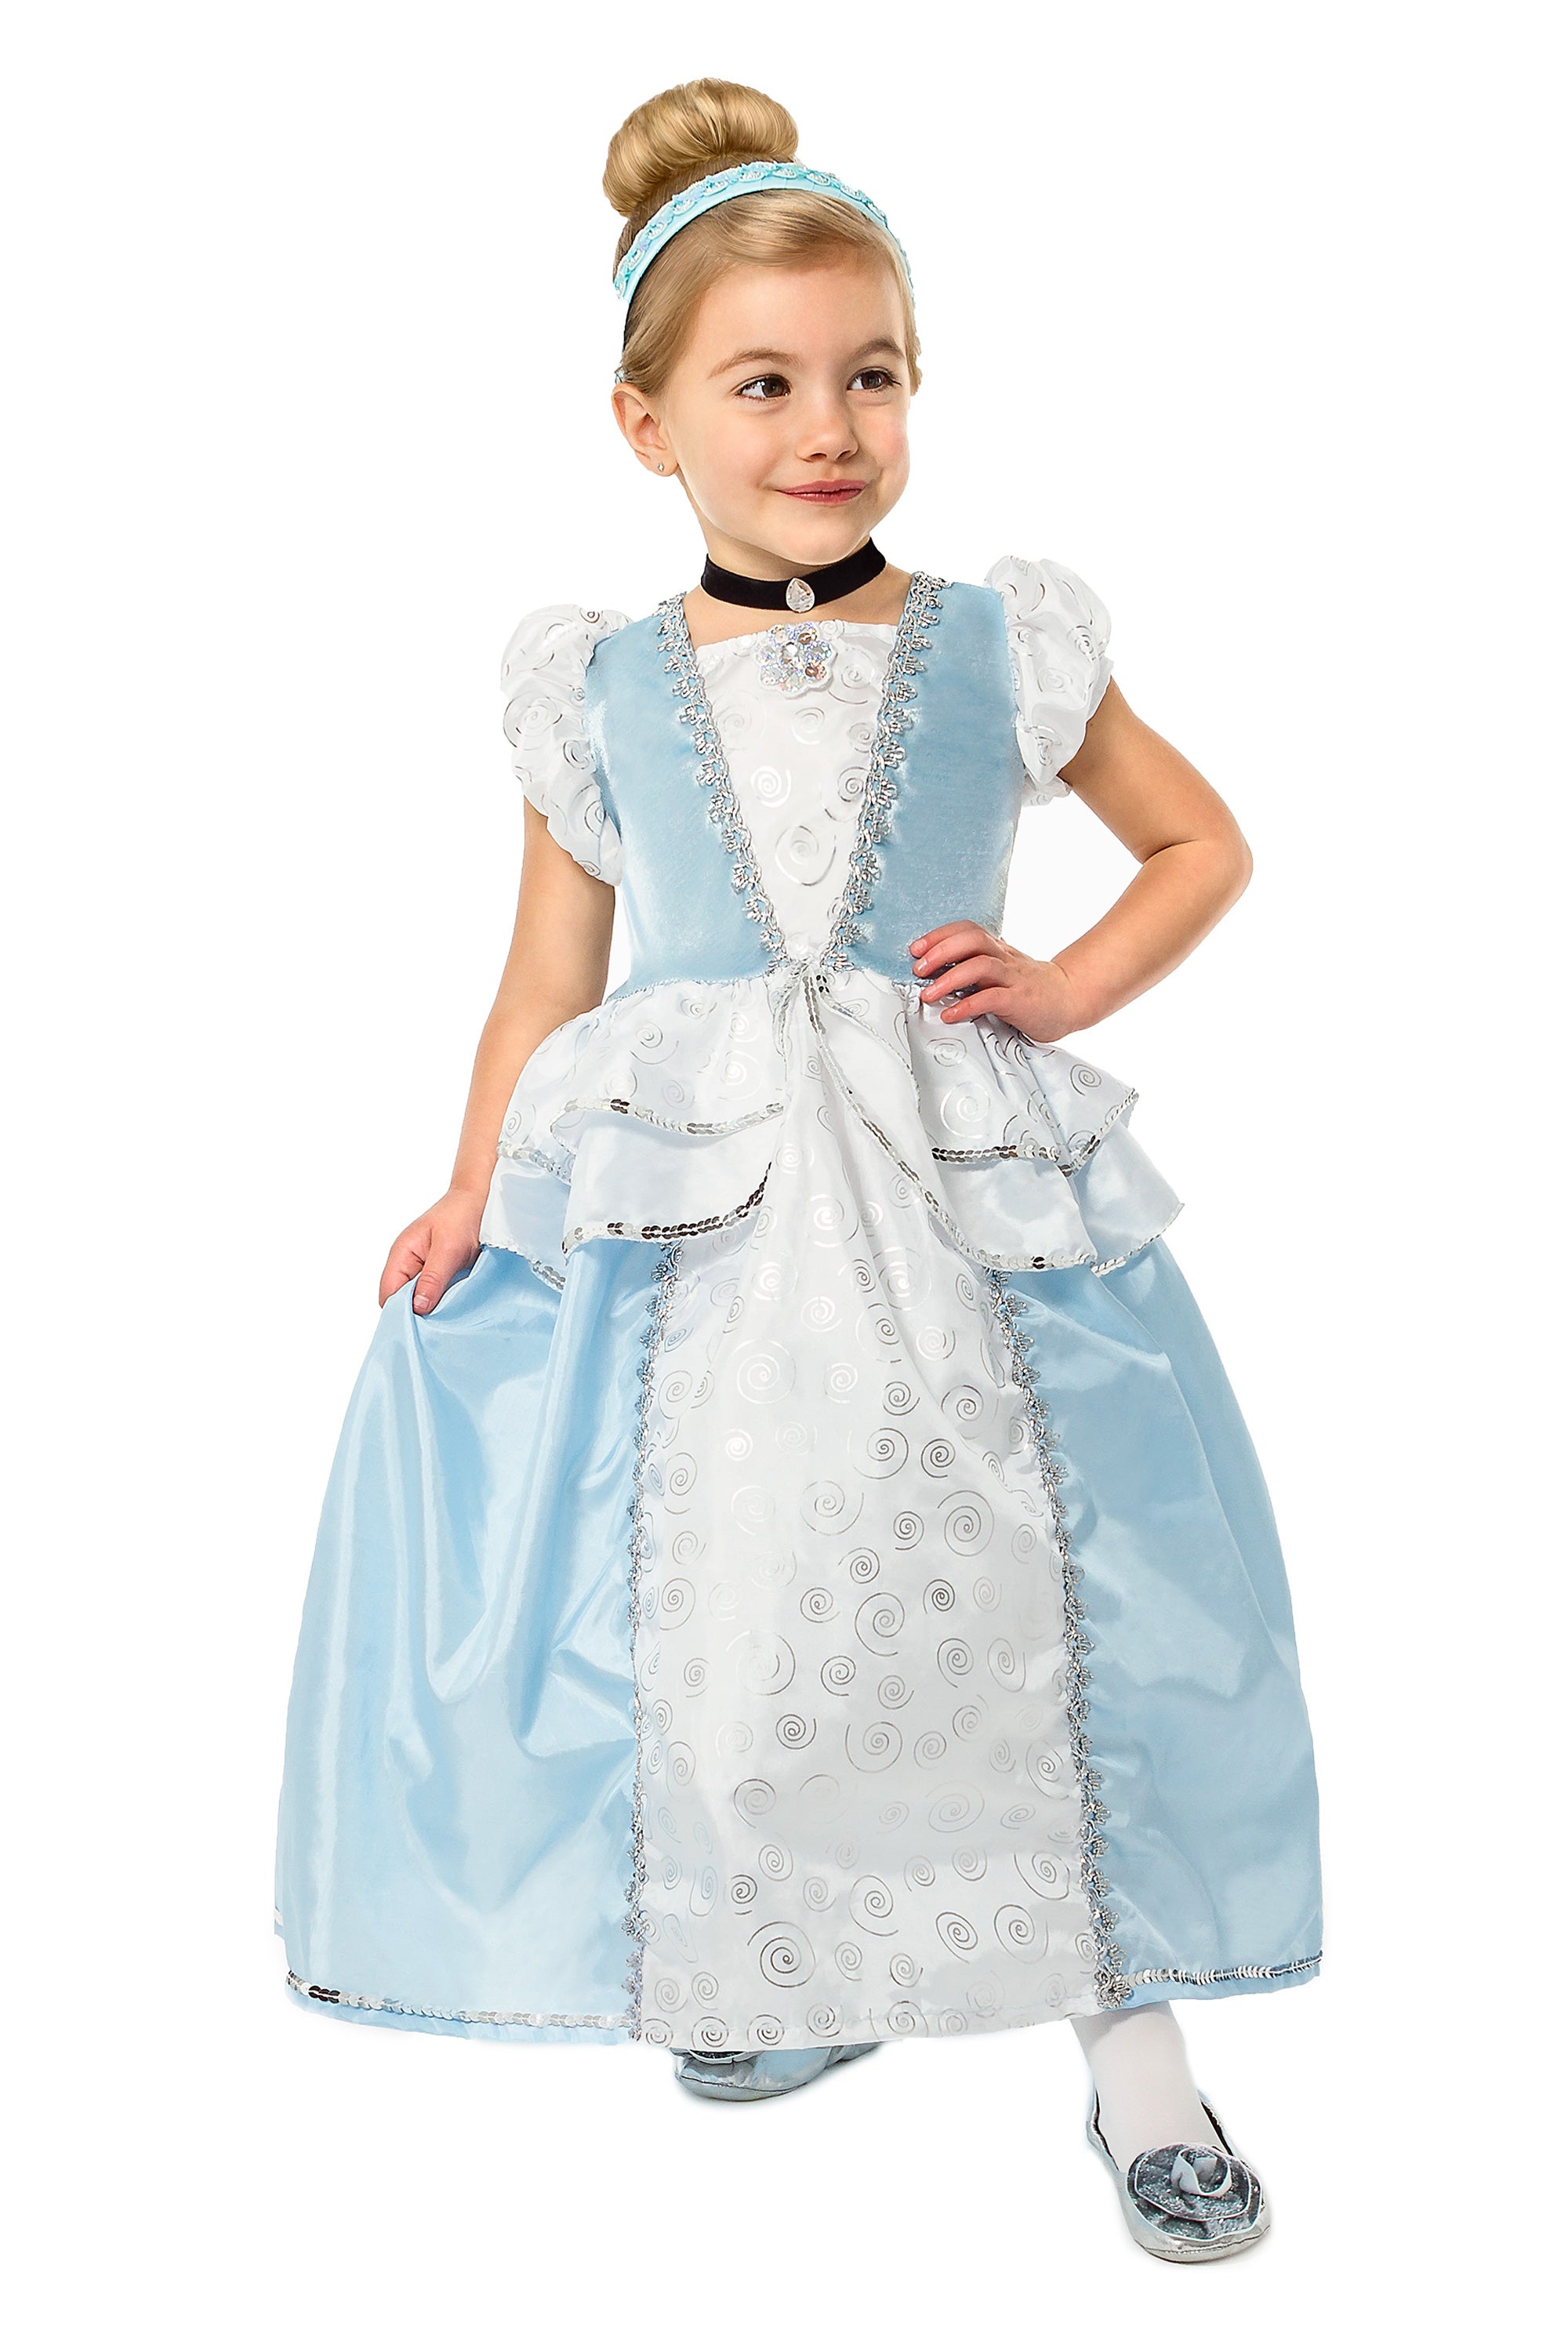 cinderella costume for kids